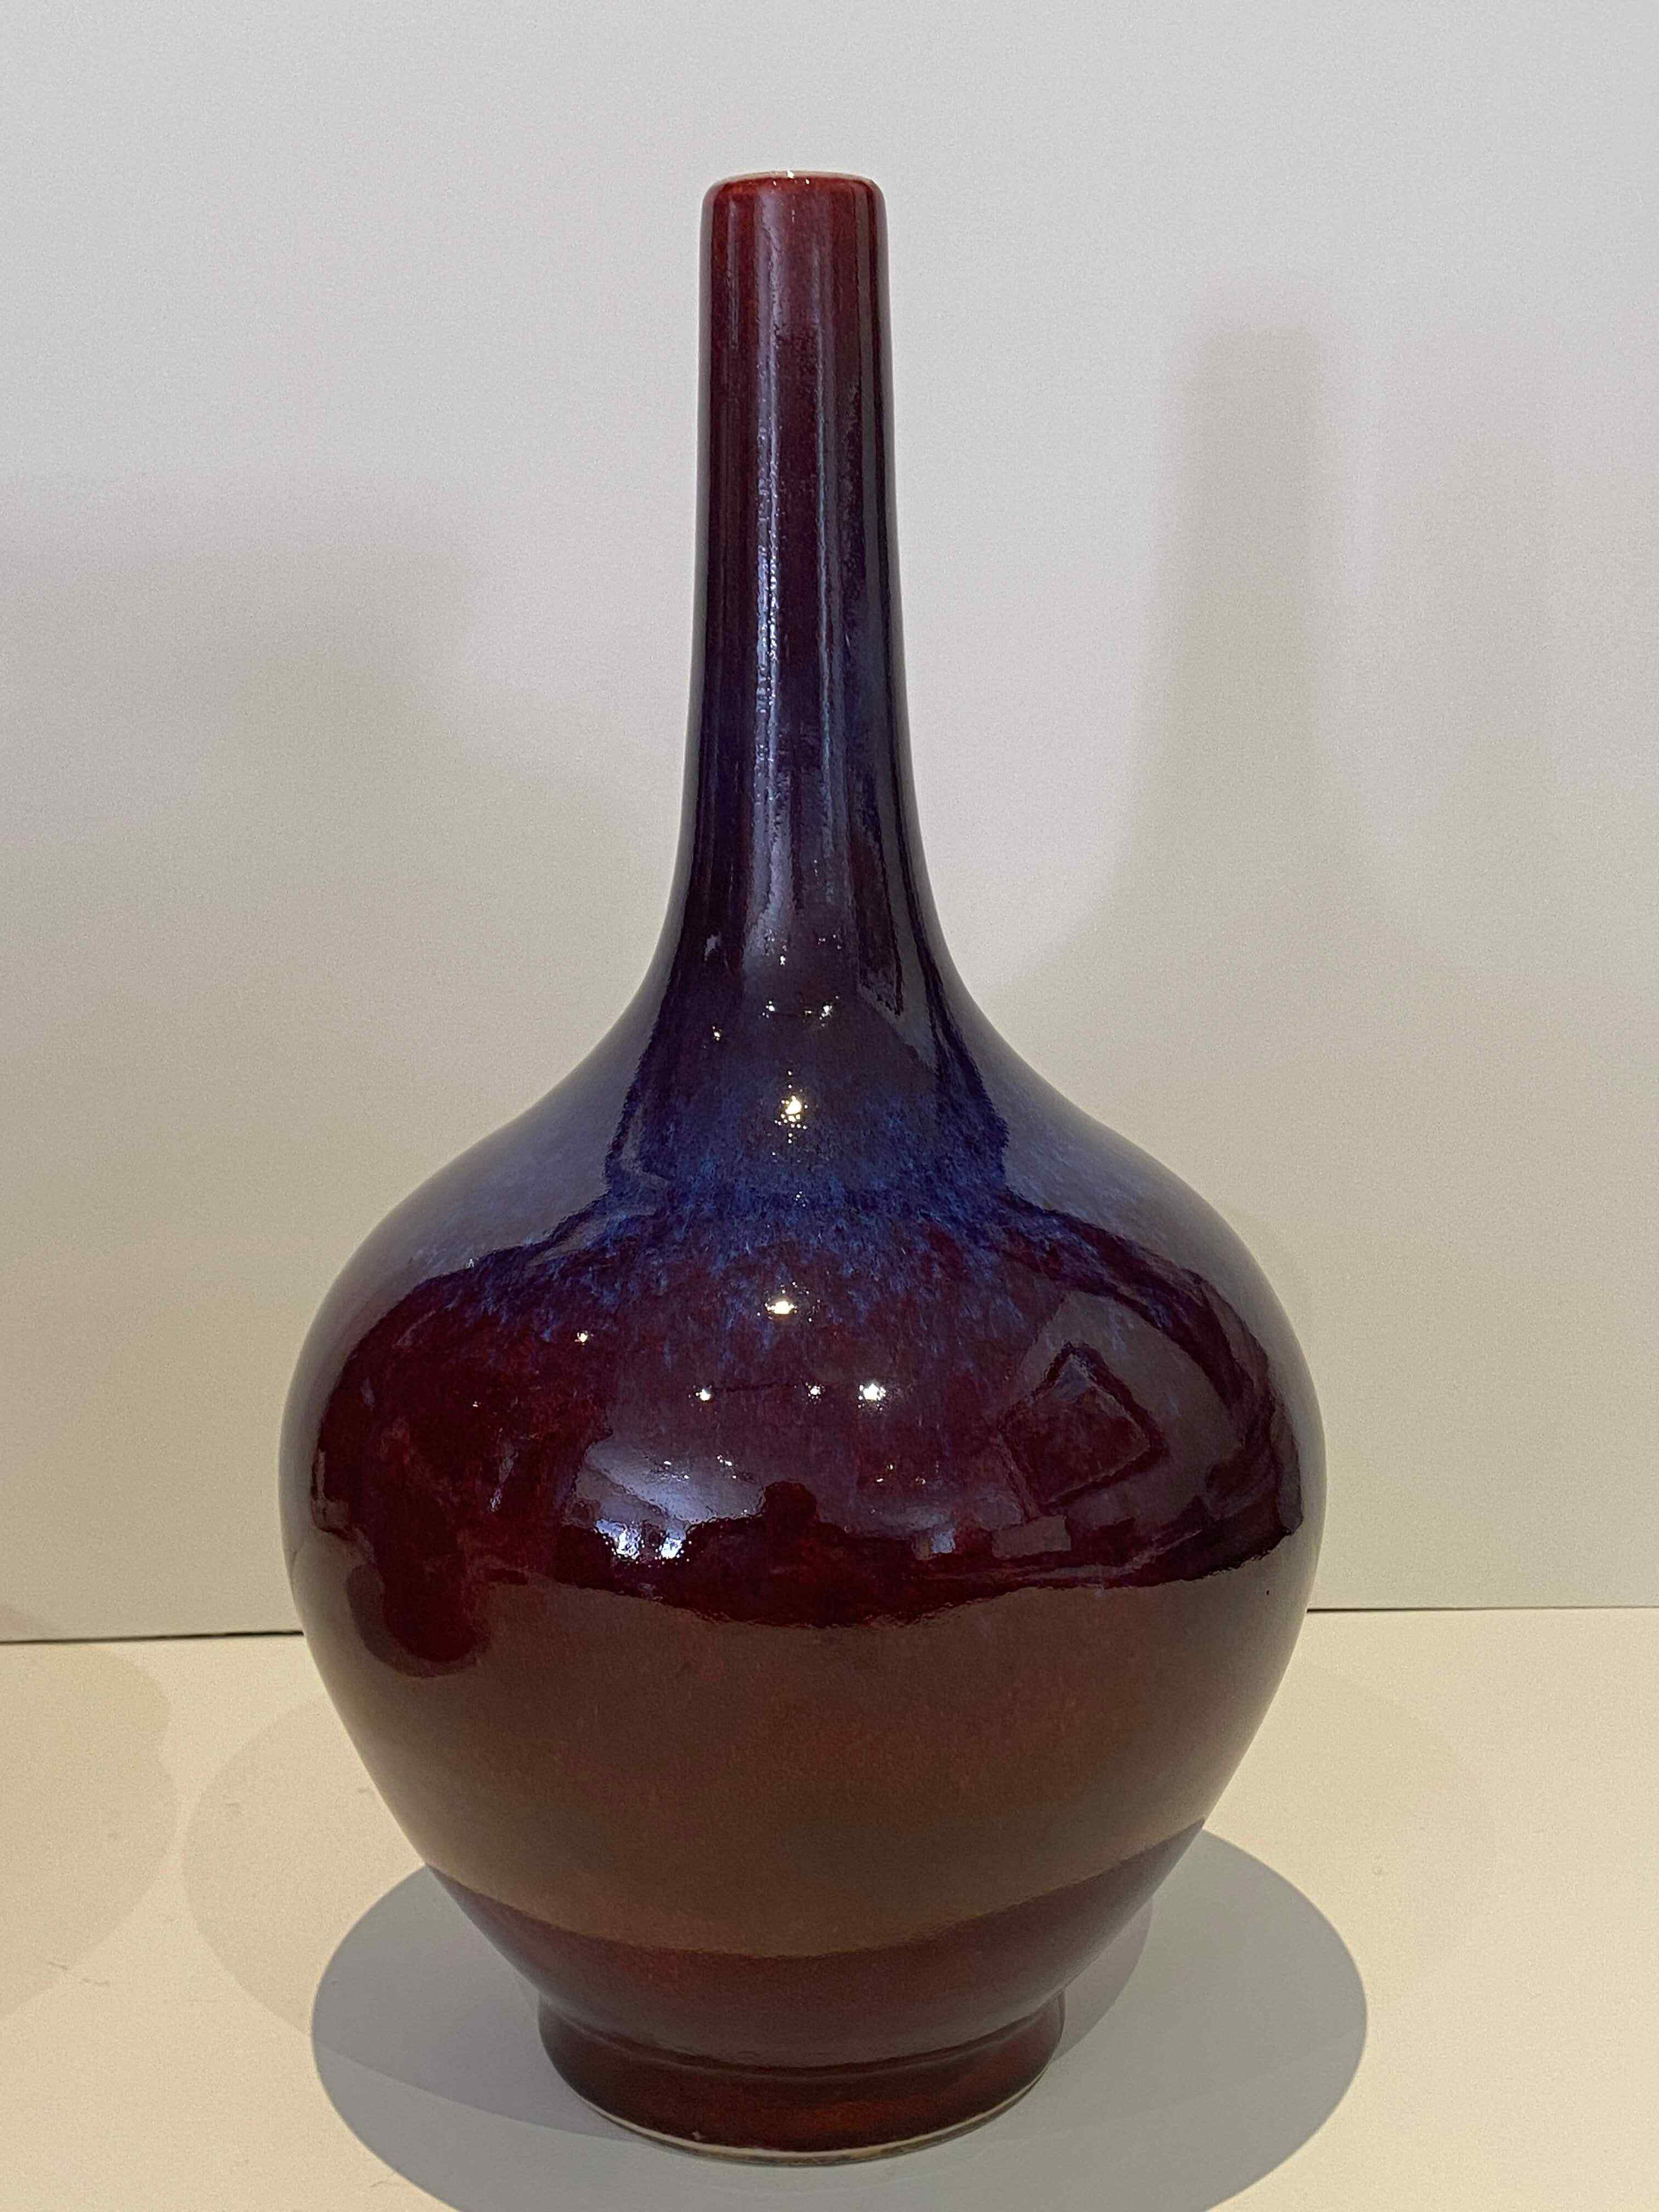 A Chinese flambé-glazed bottle vase, Qing Dynasty, 19th century